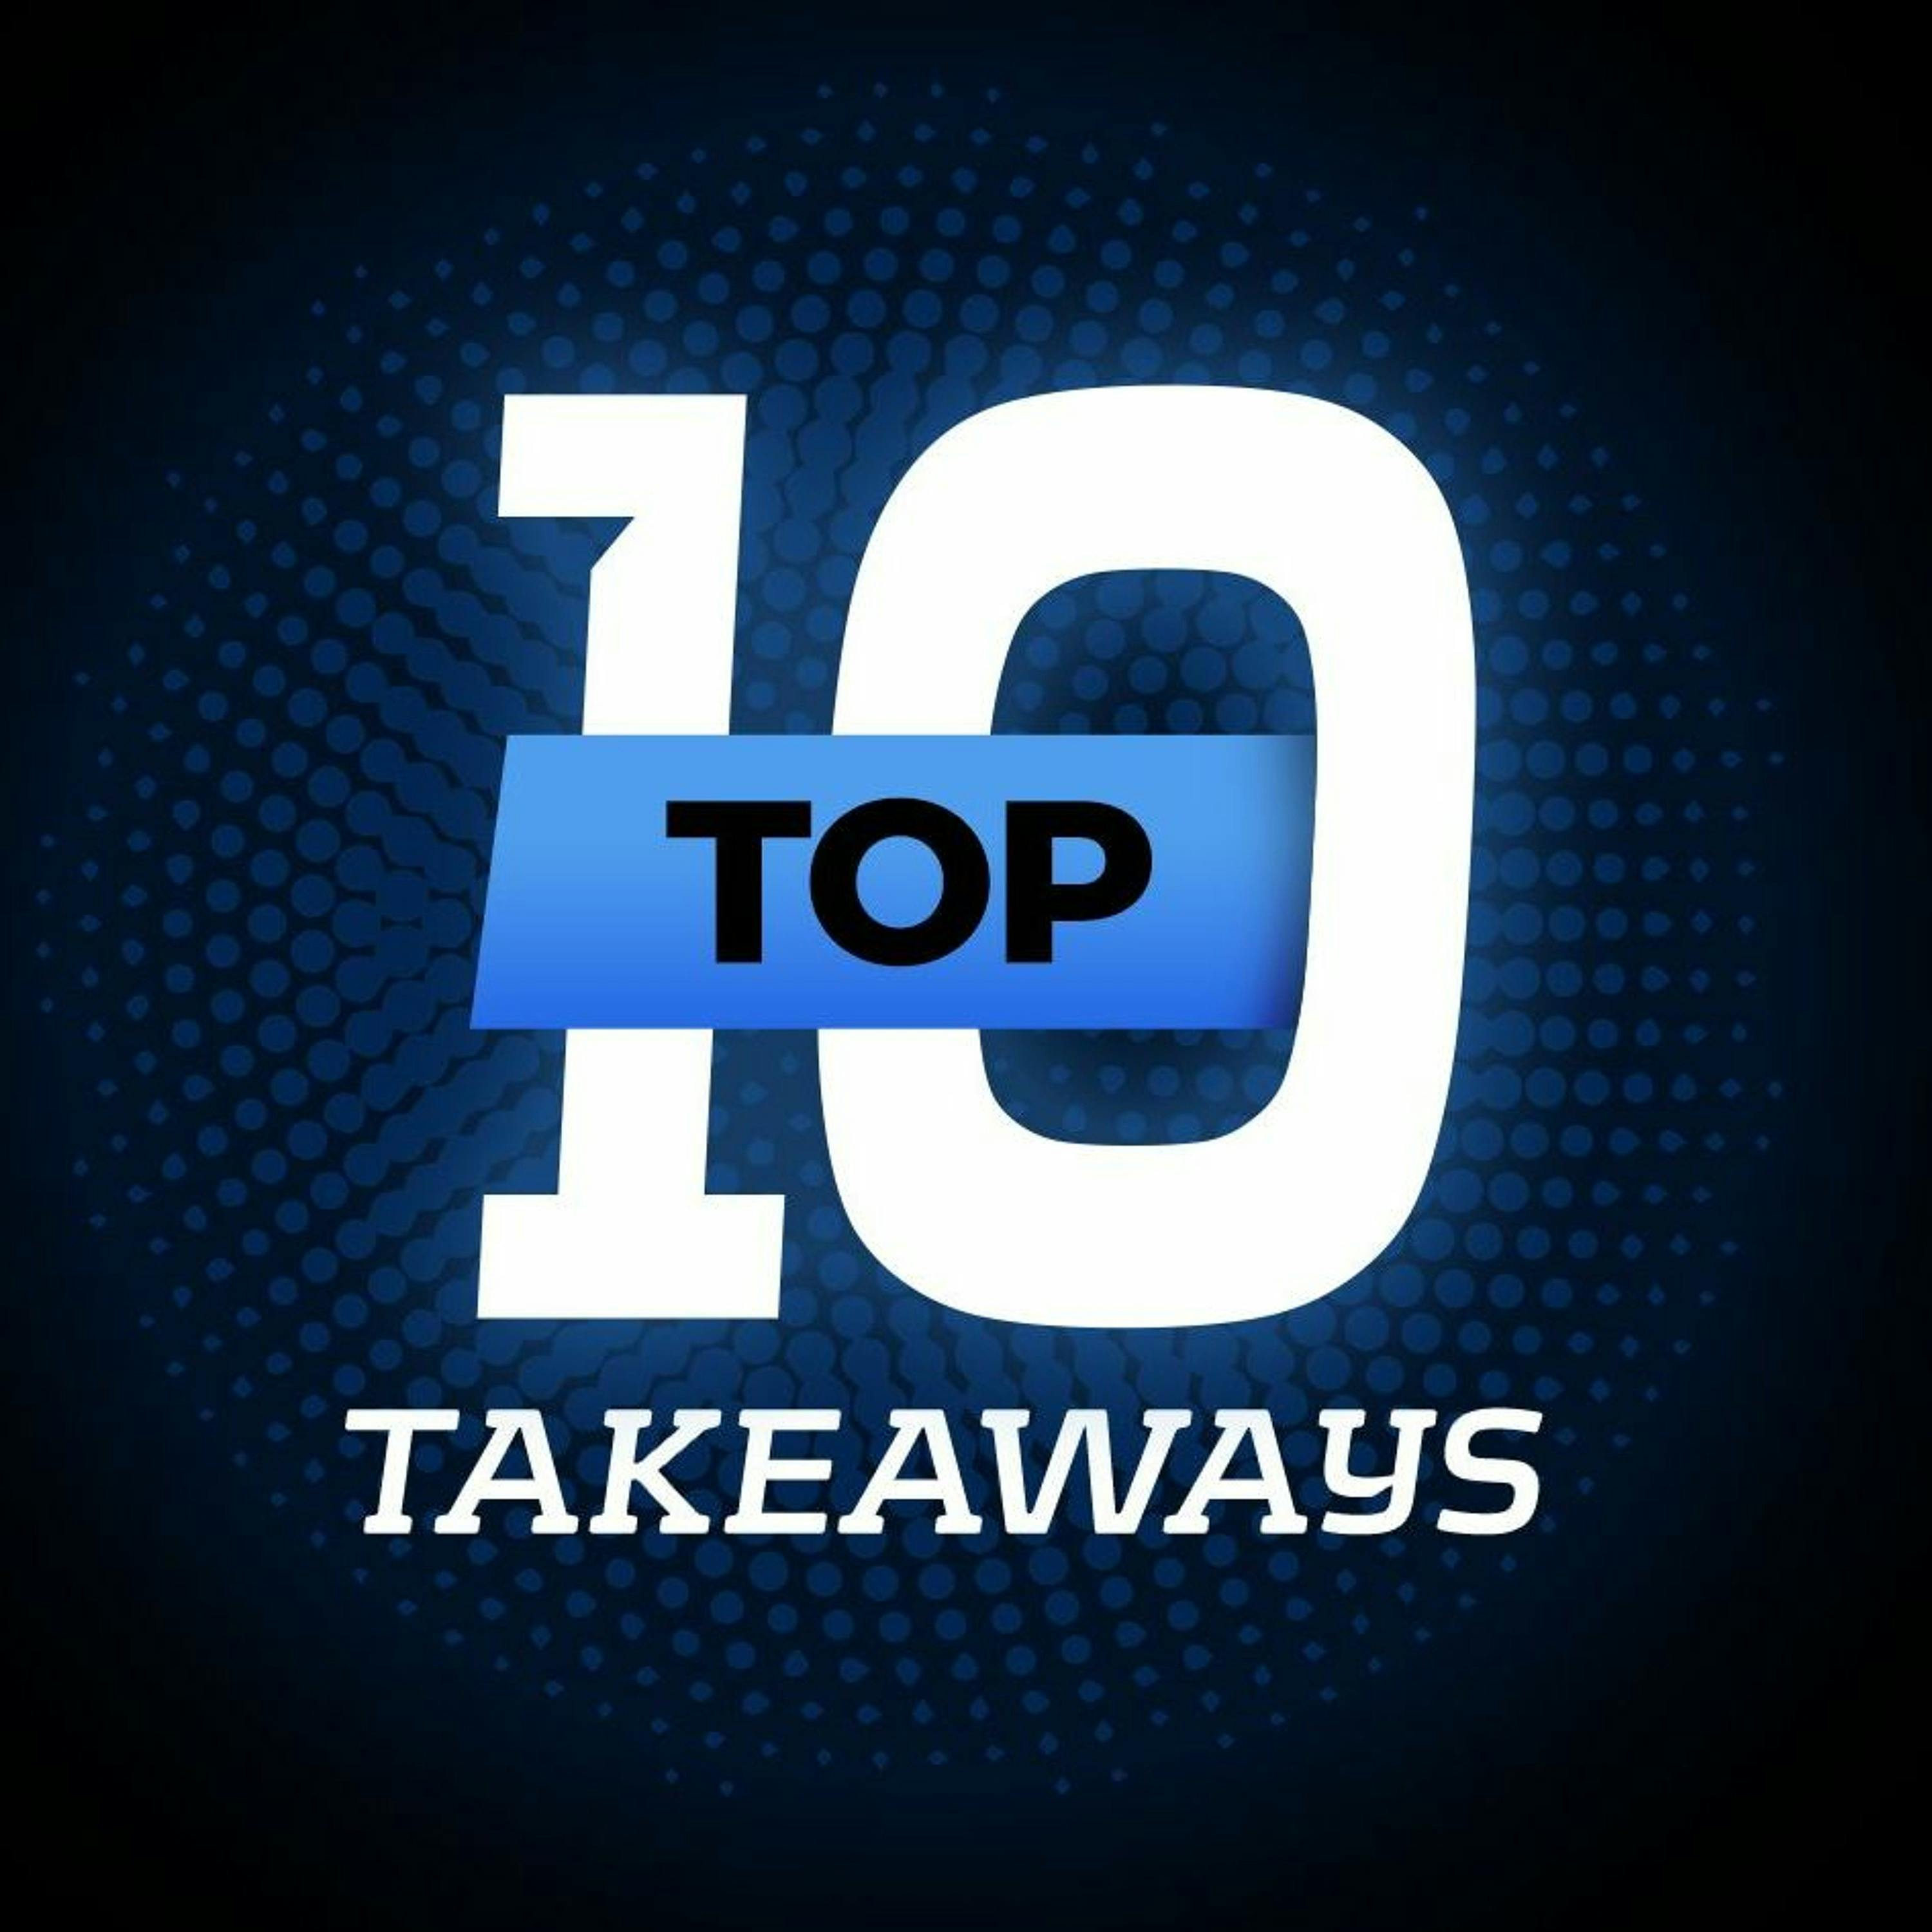 Joe Burrow elite overthrow - Top-10 Takeaways